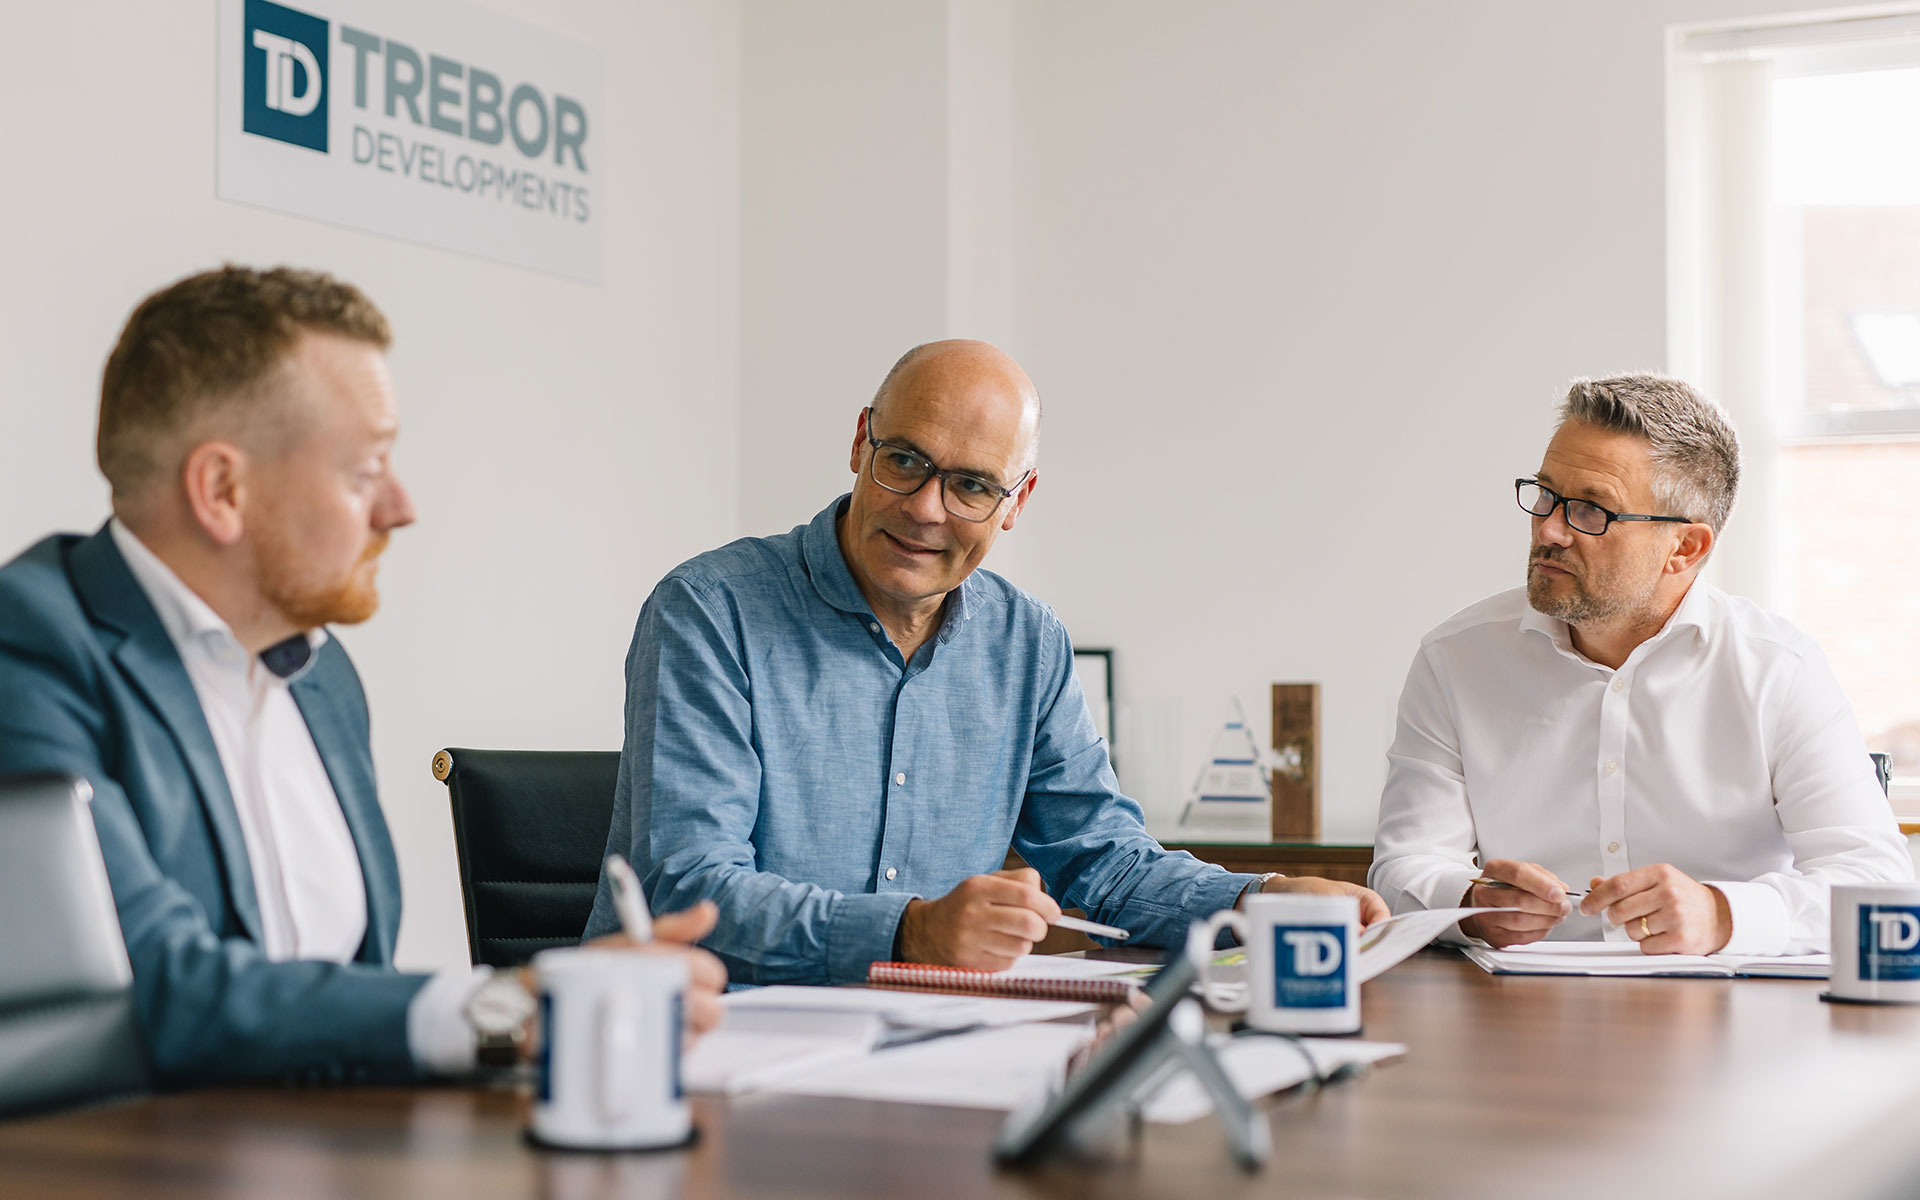 Trebor Developments | Services